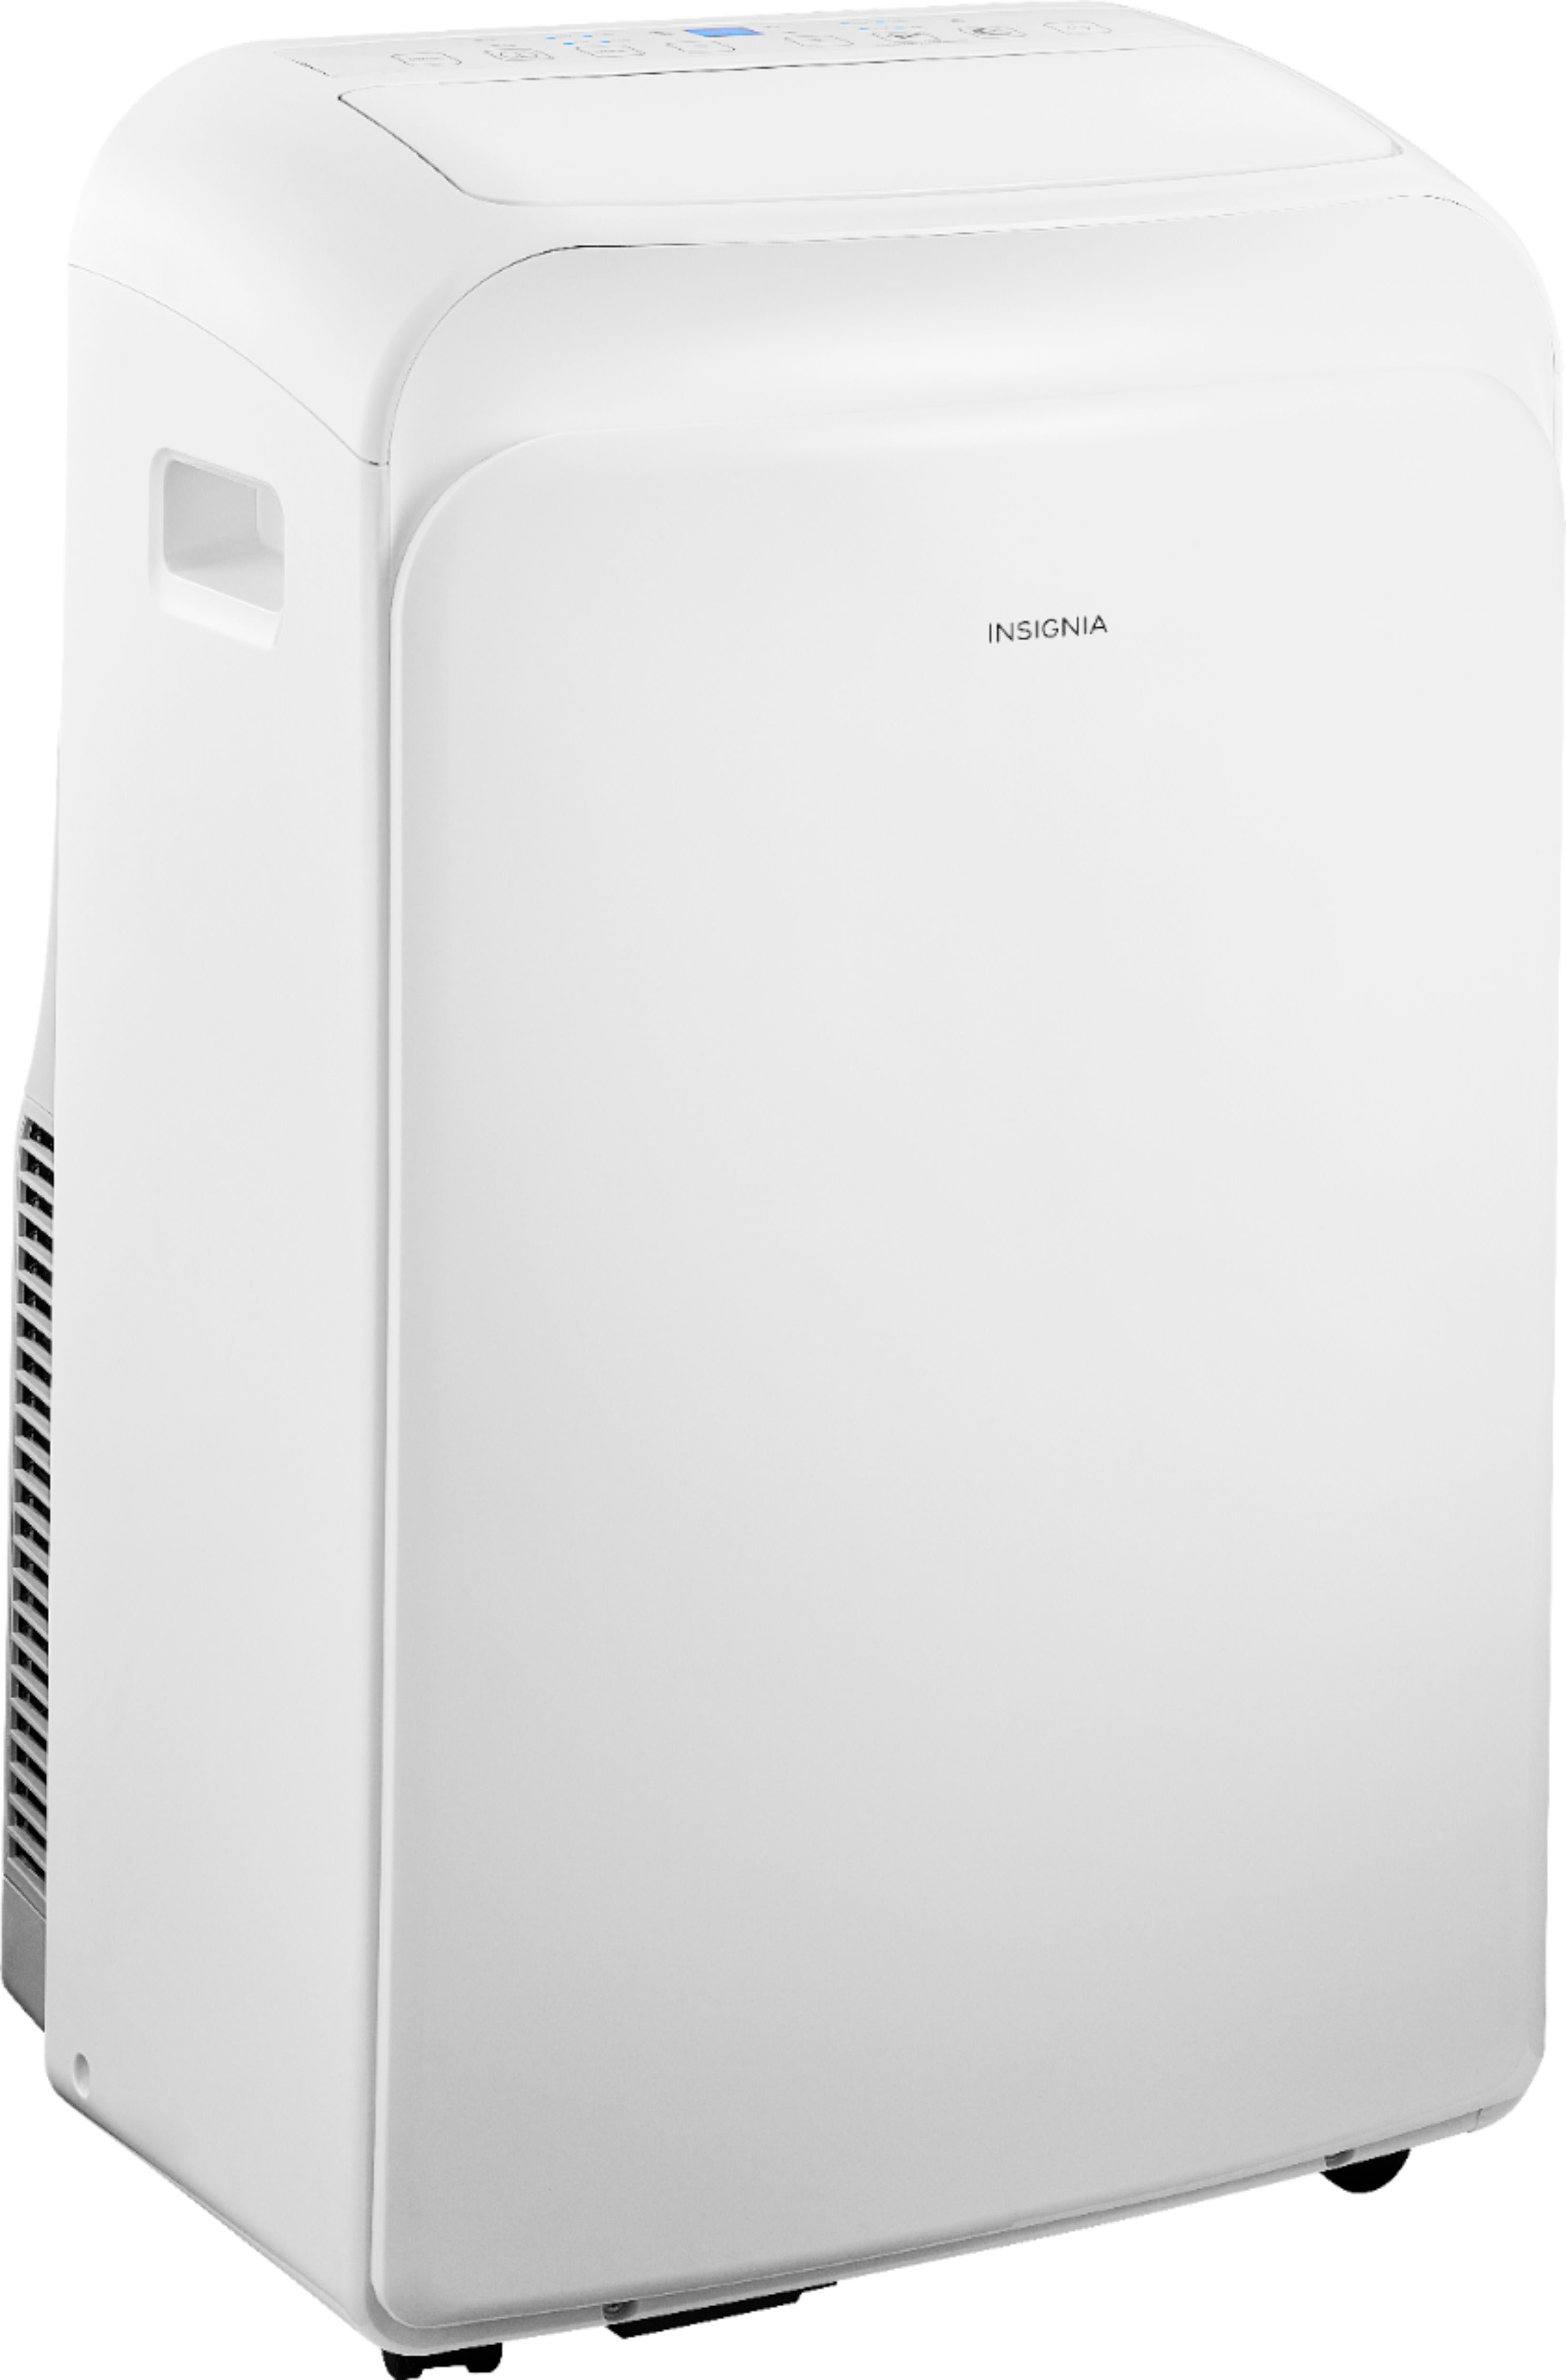 Angle View: Insignia™ - 250 Sq. Ft. Portable Air Conditioner - White